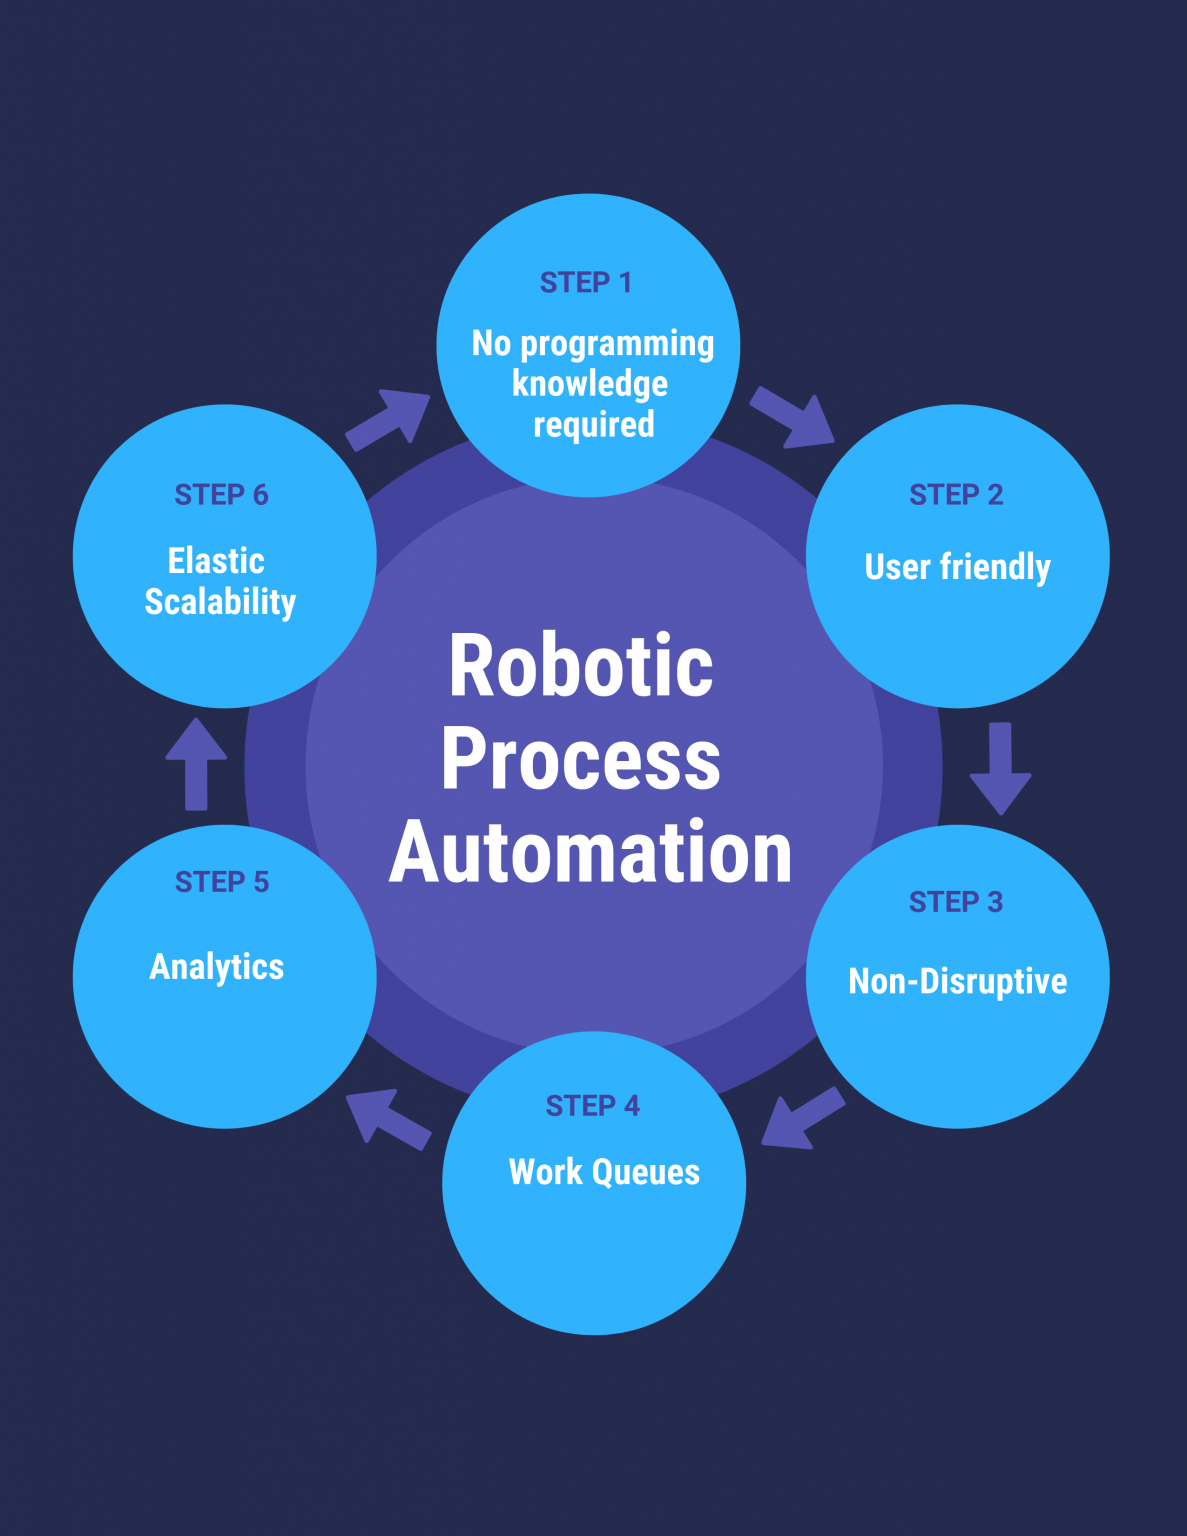 bachelor thesis robotic process automation